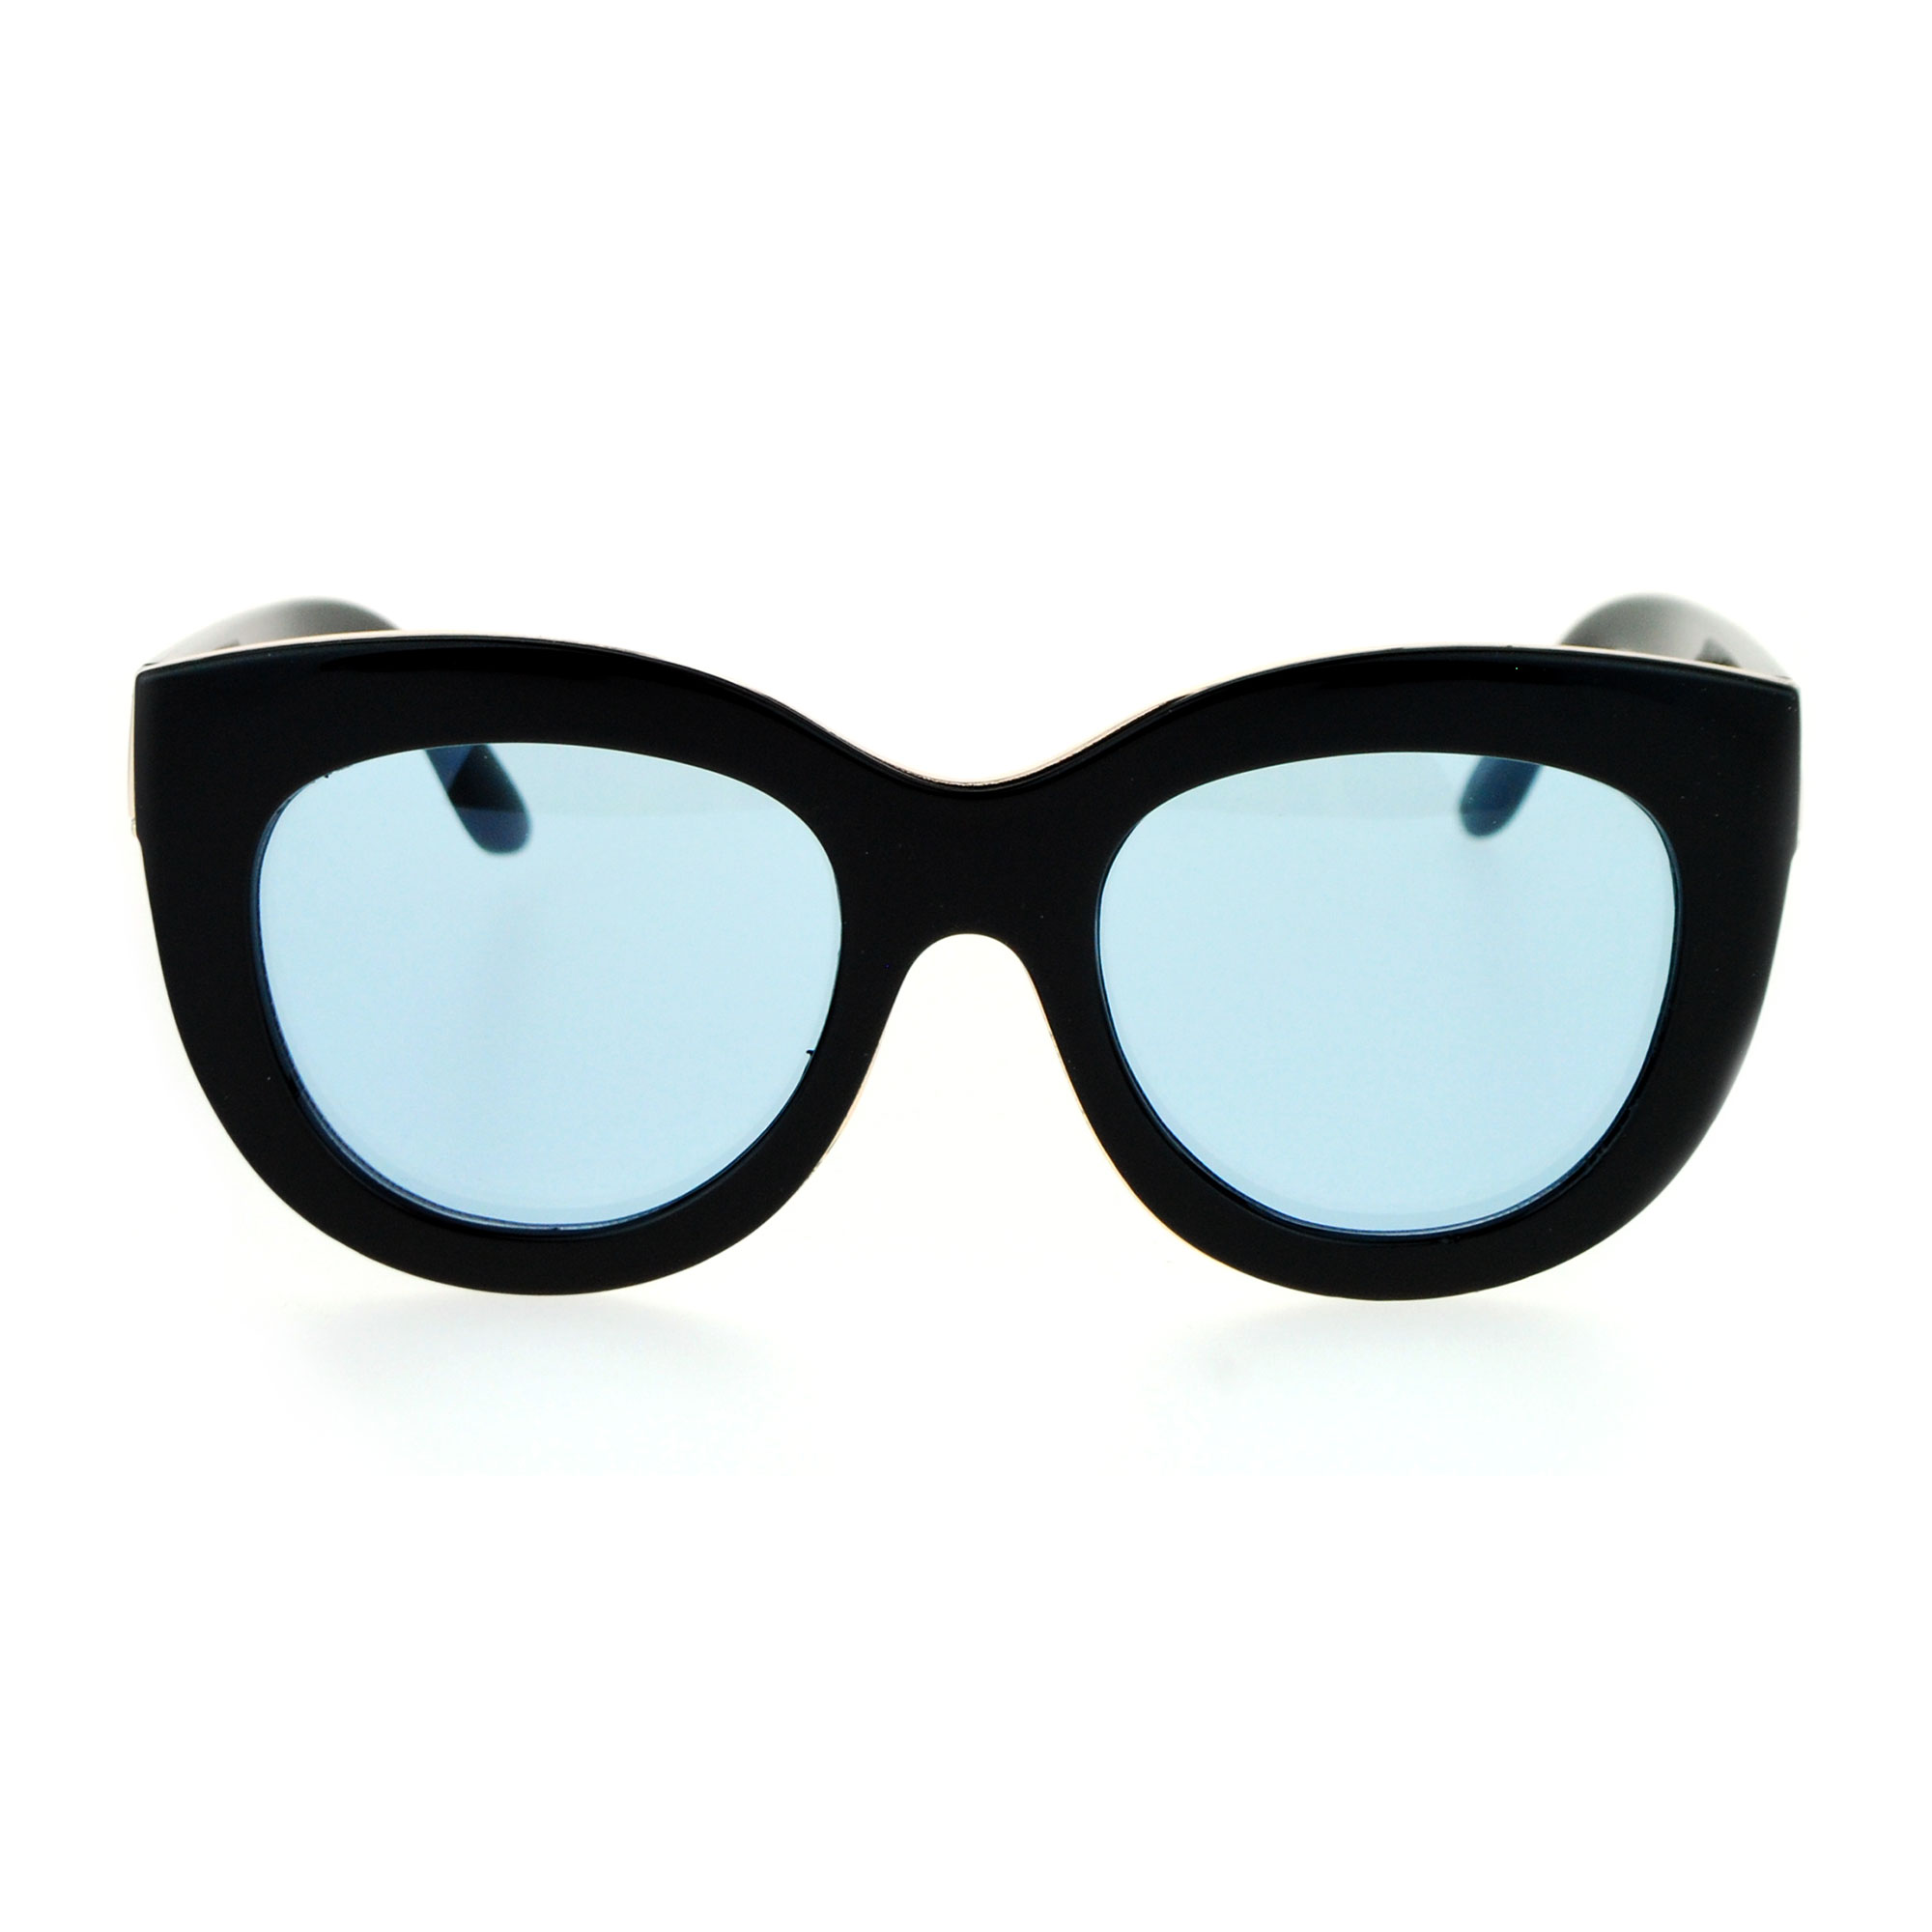 SA106 Diva Thick Plastic Oversize Cat Eye Womens Sunglasses Black Blue - image 1 of 3